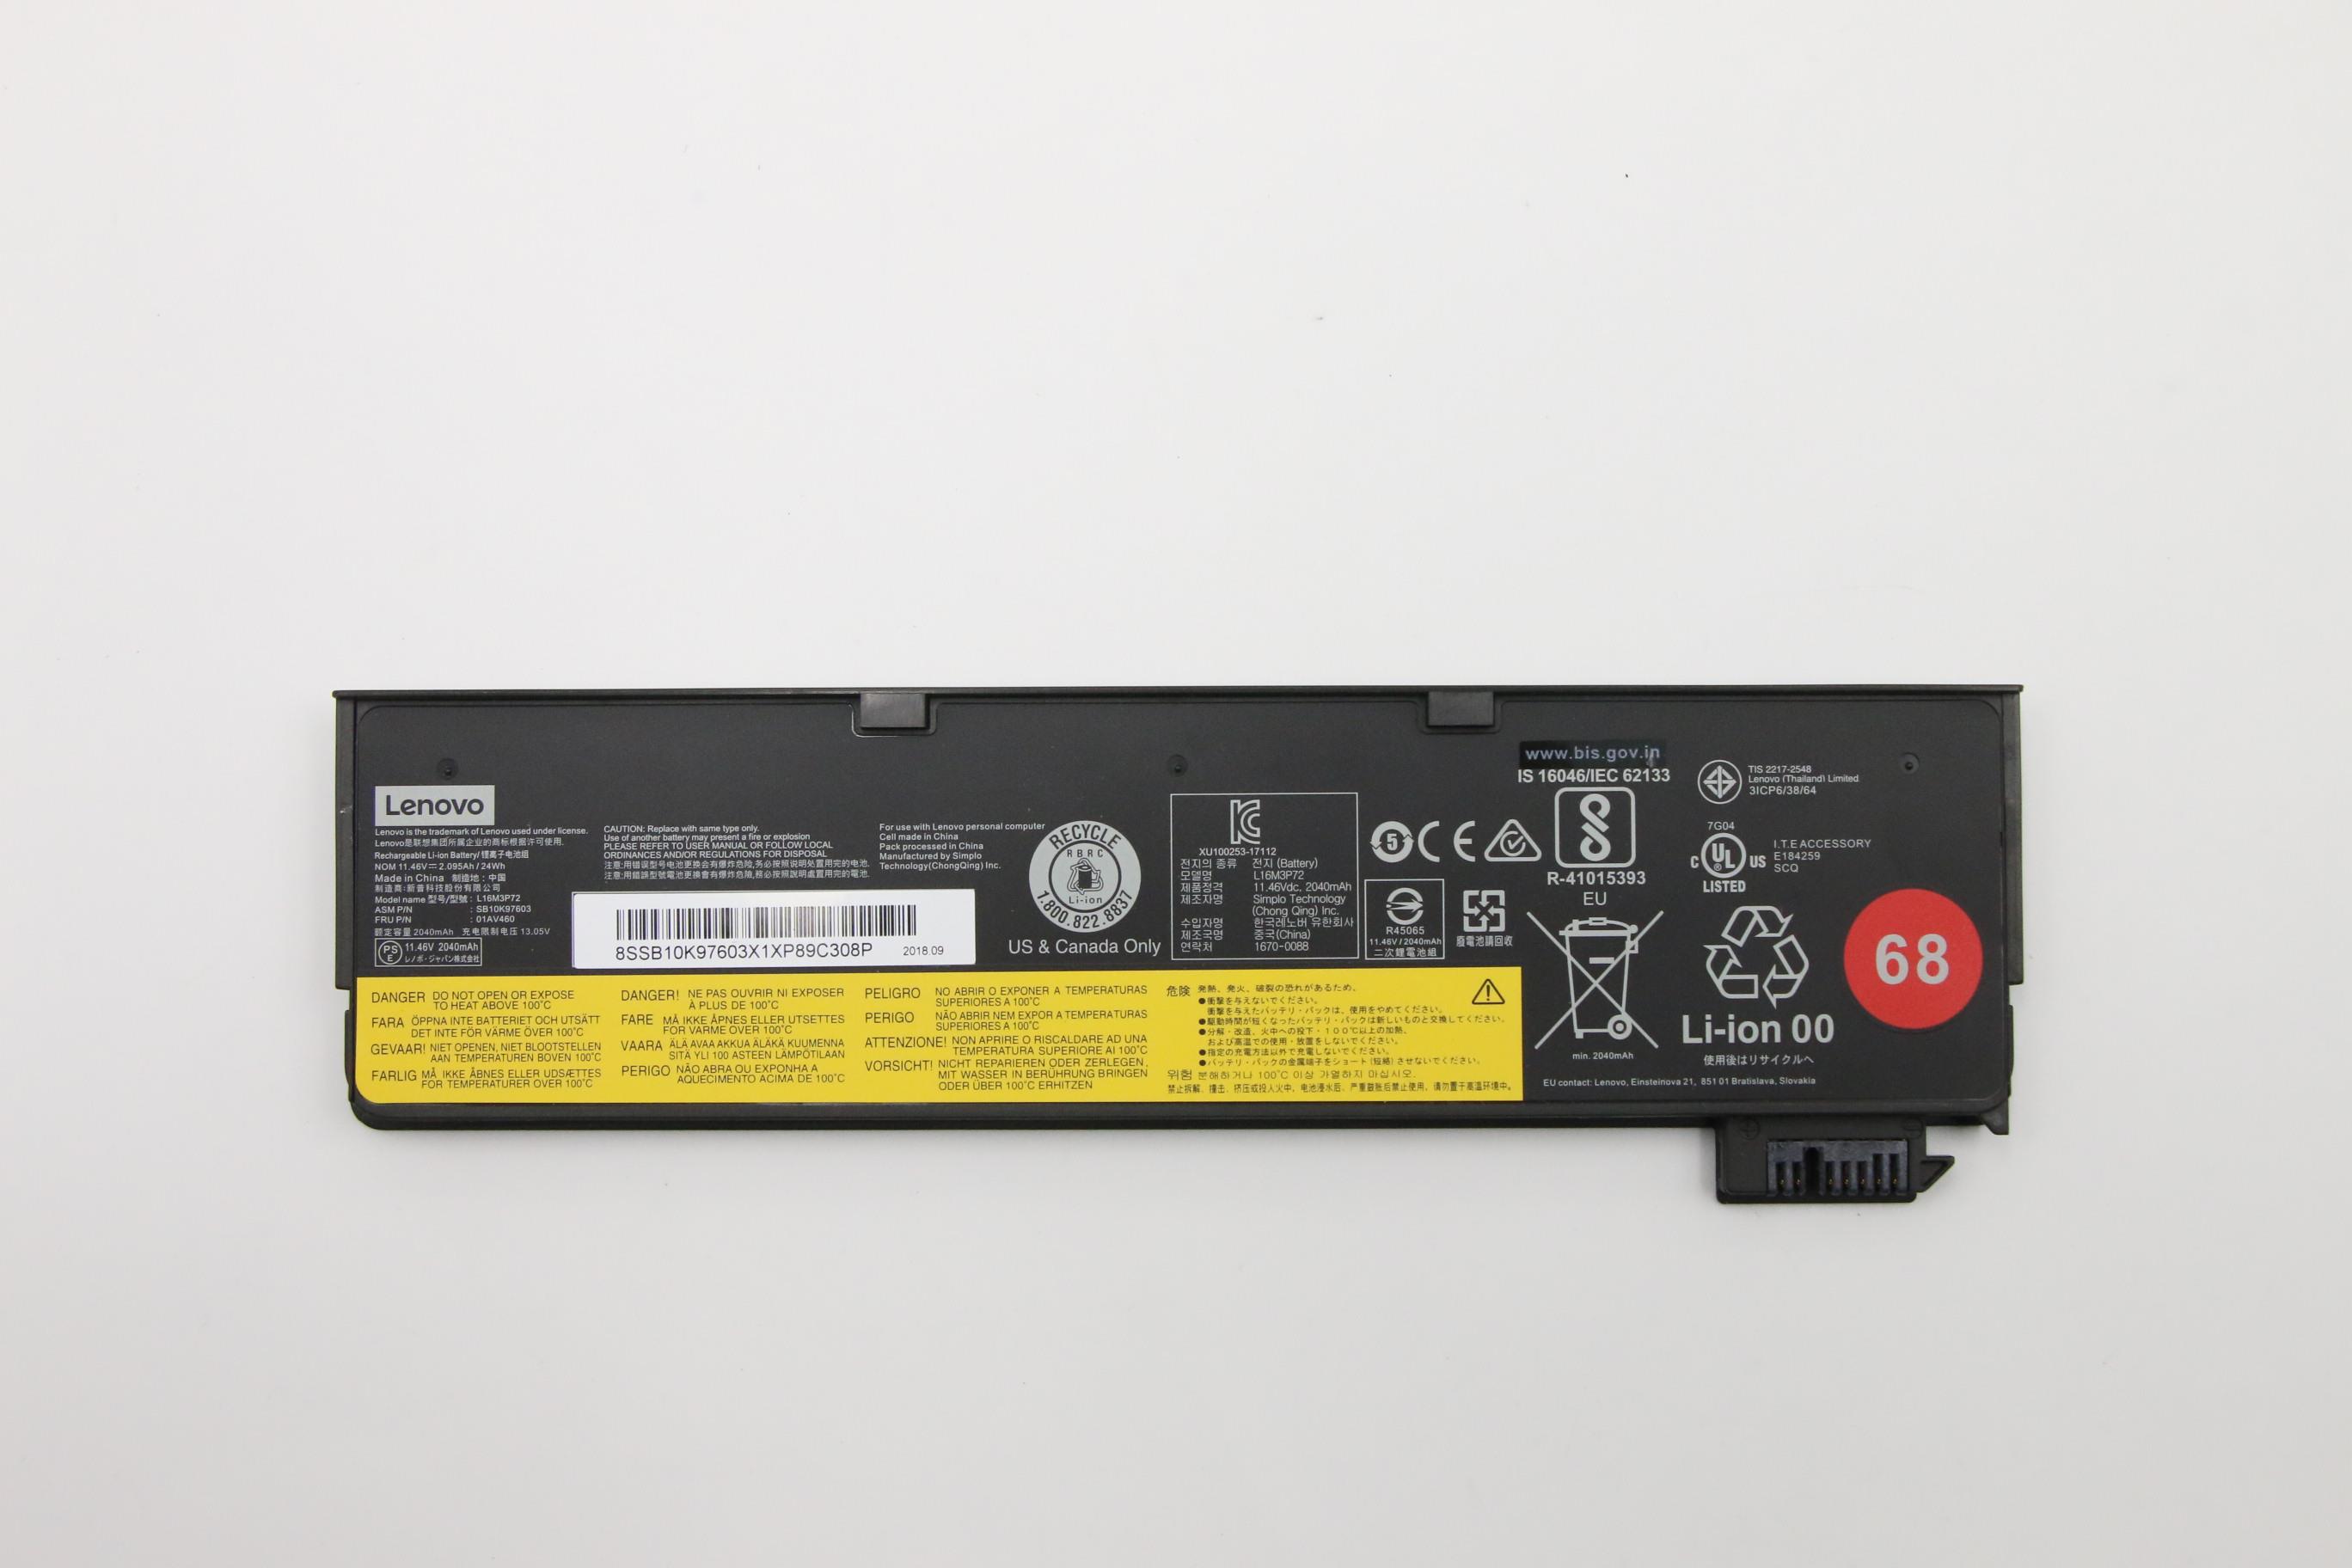 Lenovo ThinkPad T460 BATTERY - 01AV460